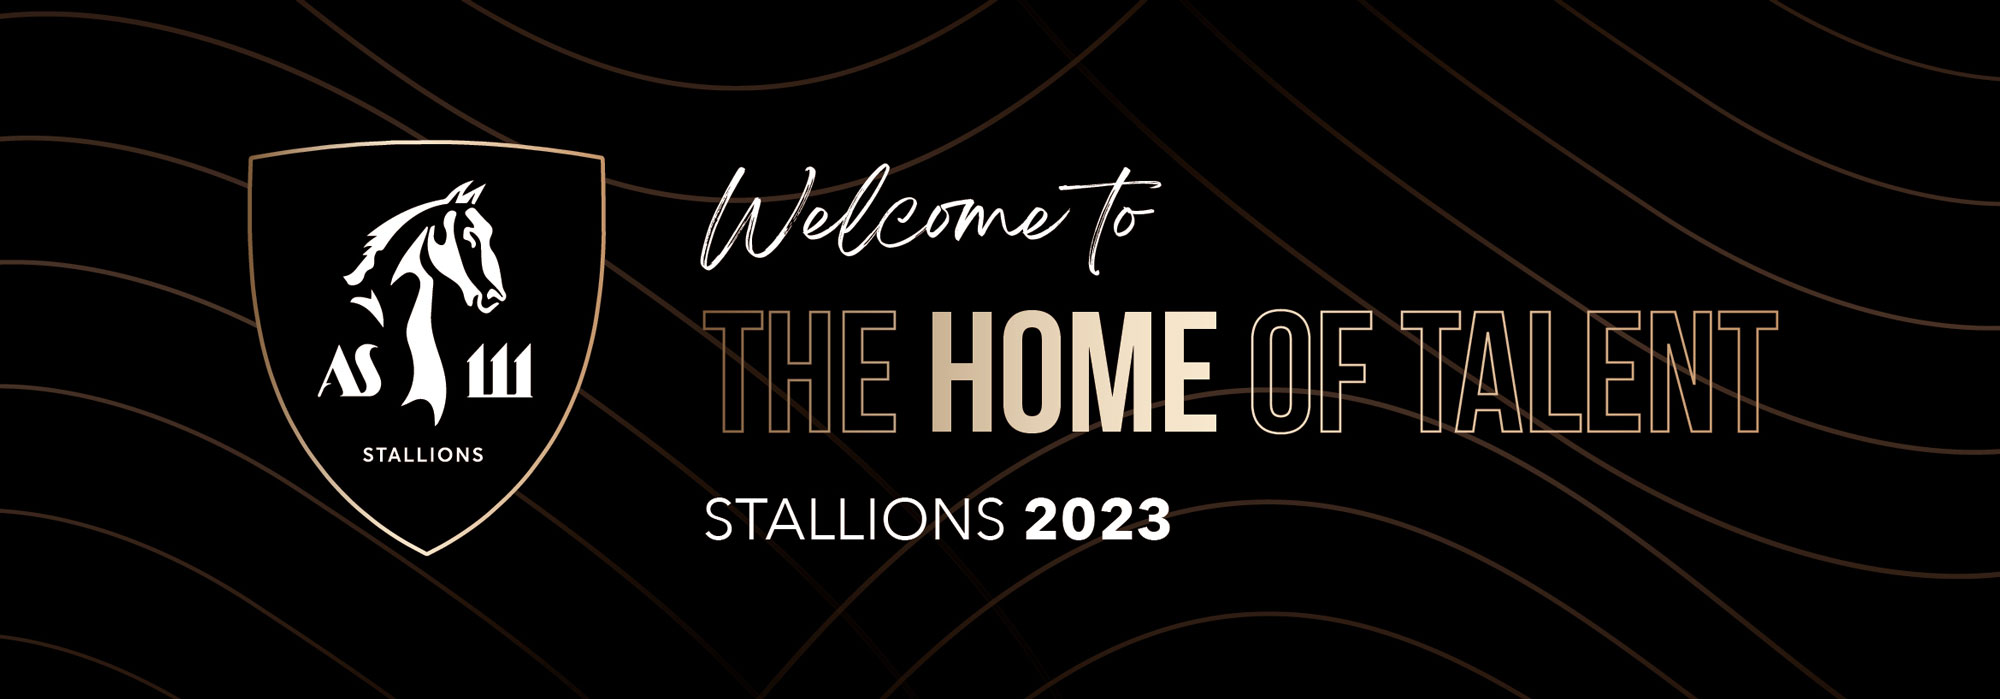 AS111 Stallions 2023